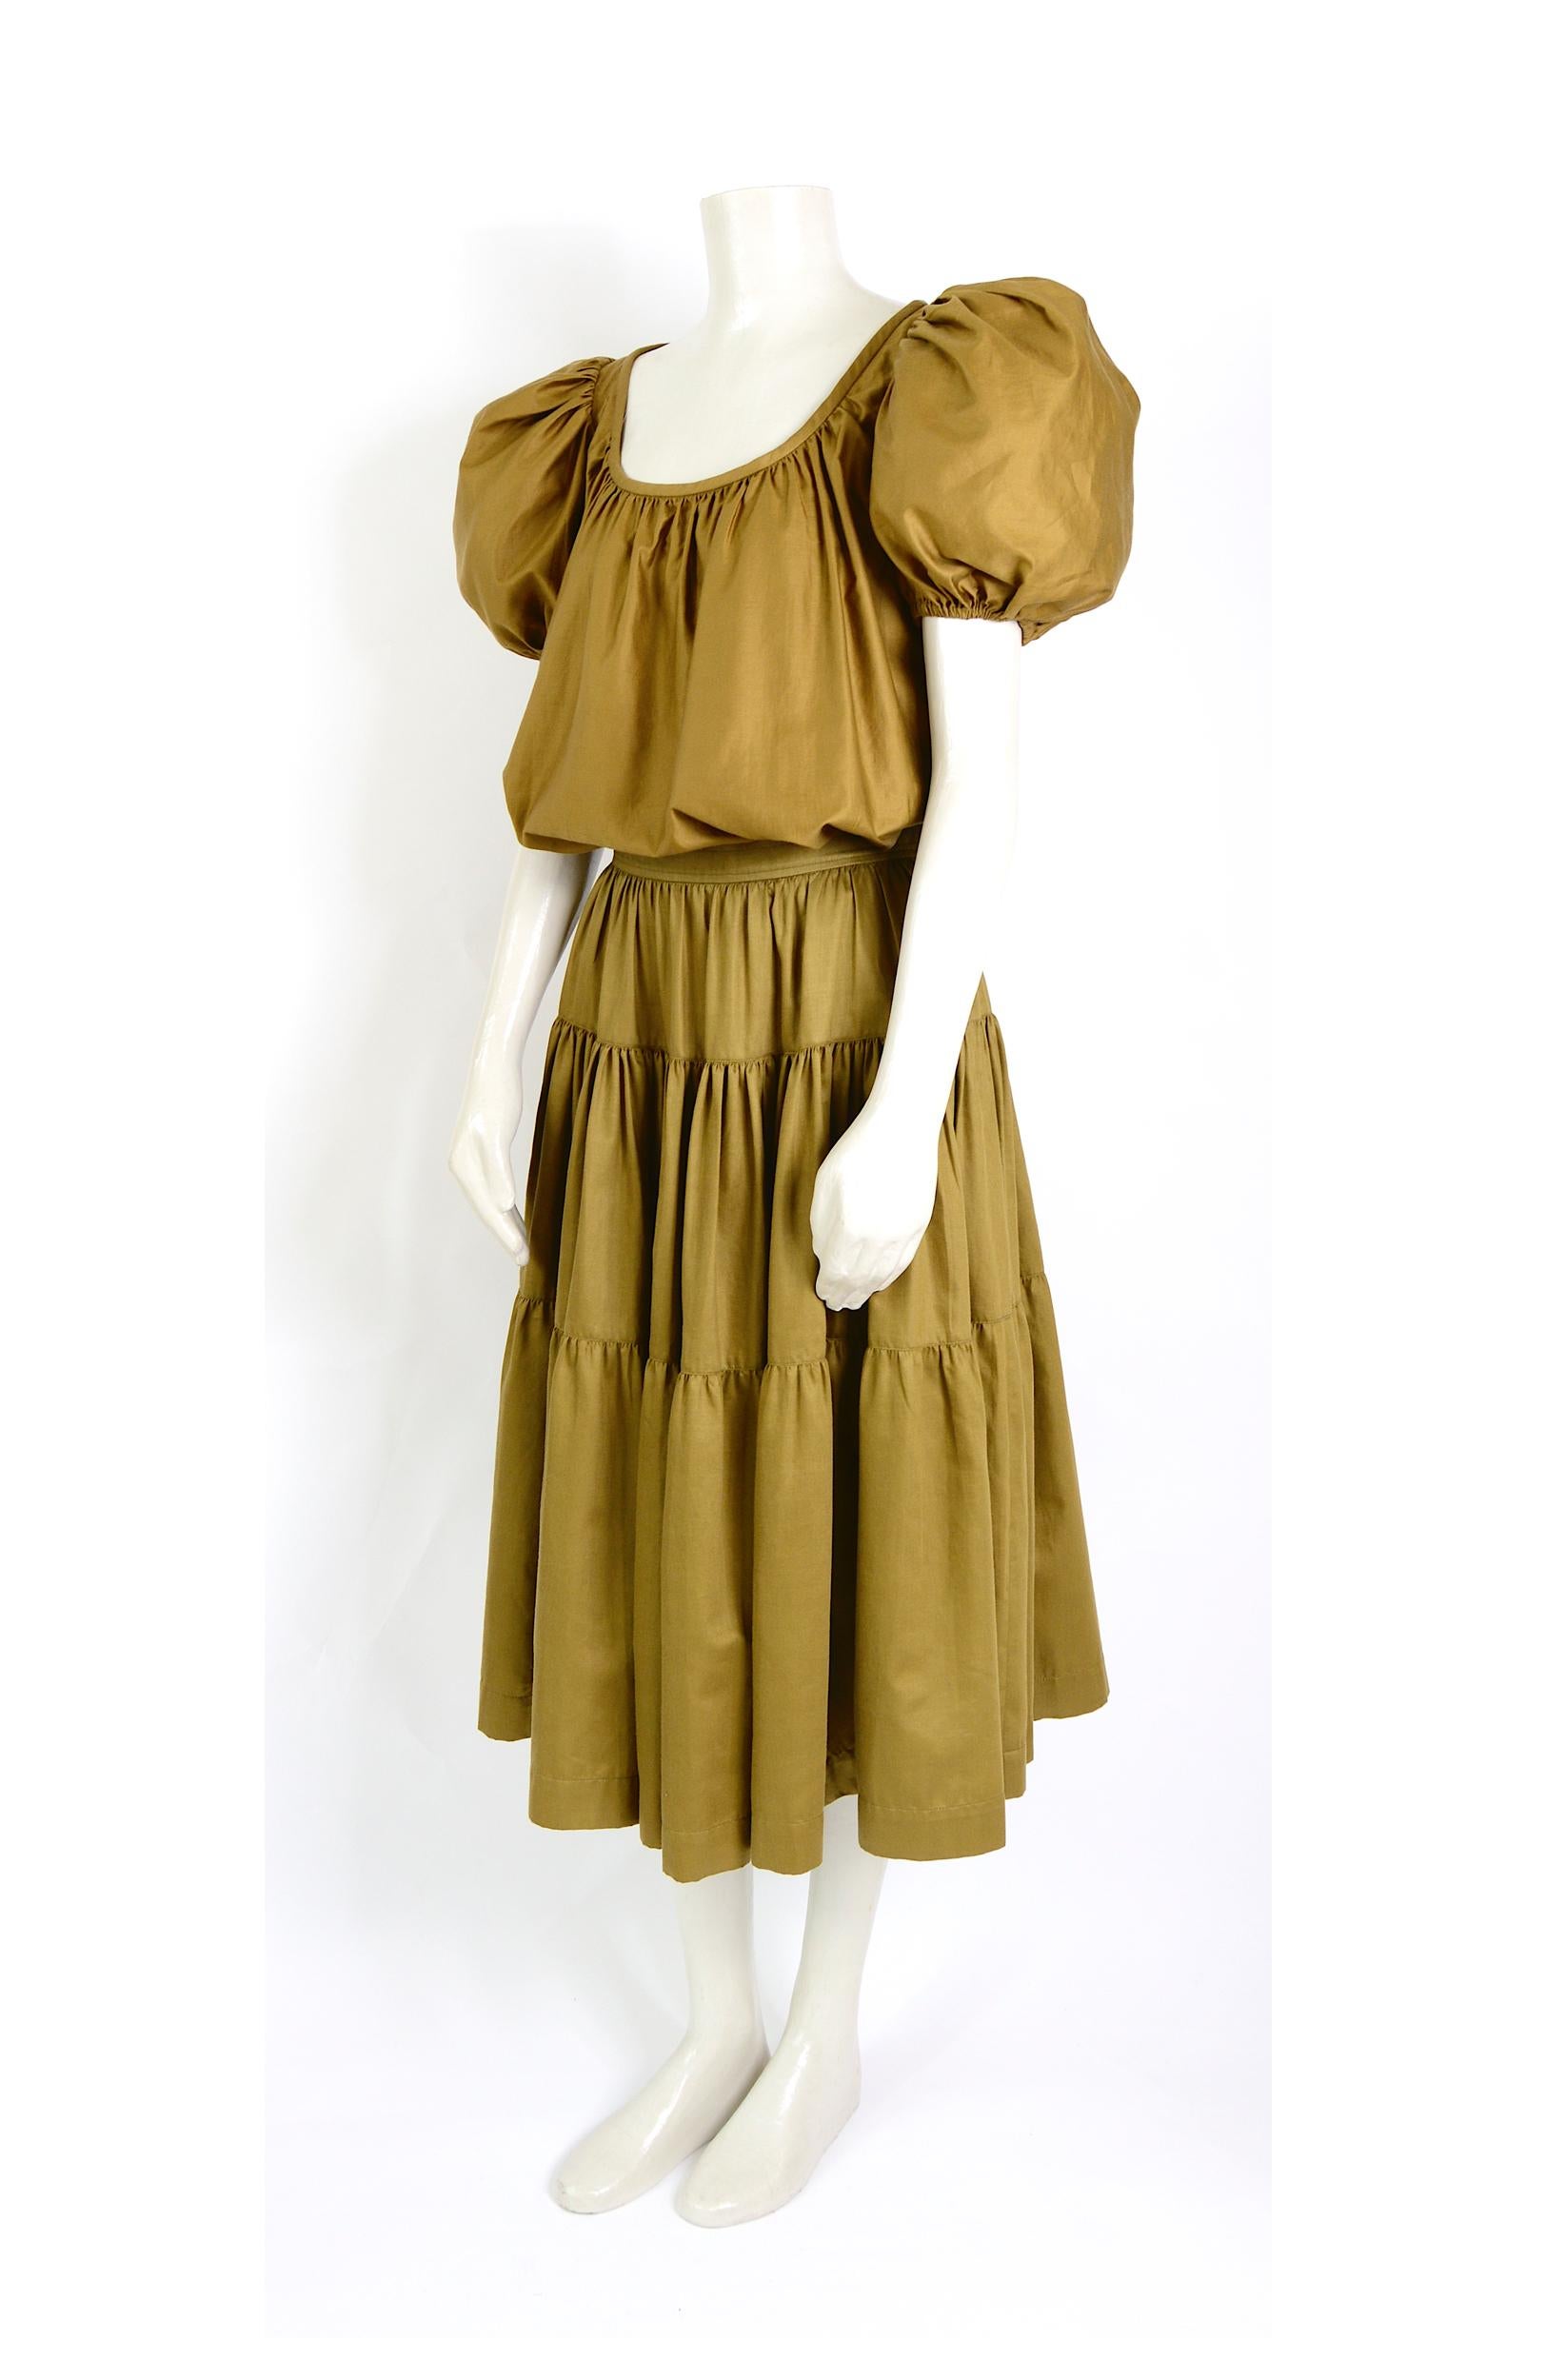 Brown Yves Saint Laurent iconic 1970s vintage khaki cotton peasant top and skirt set